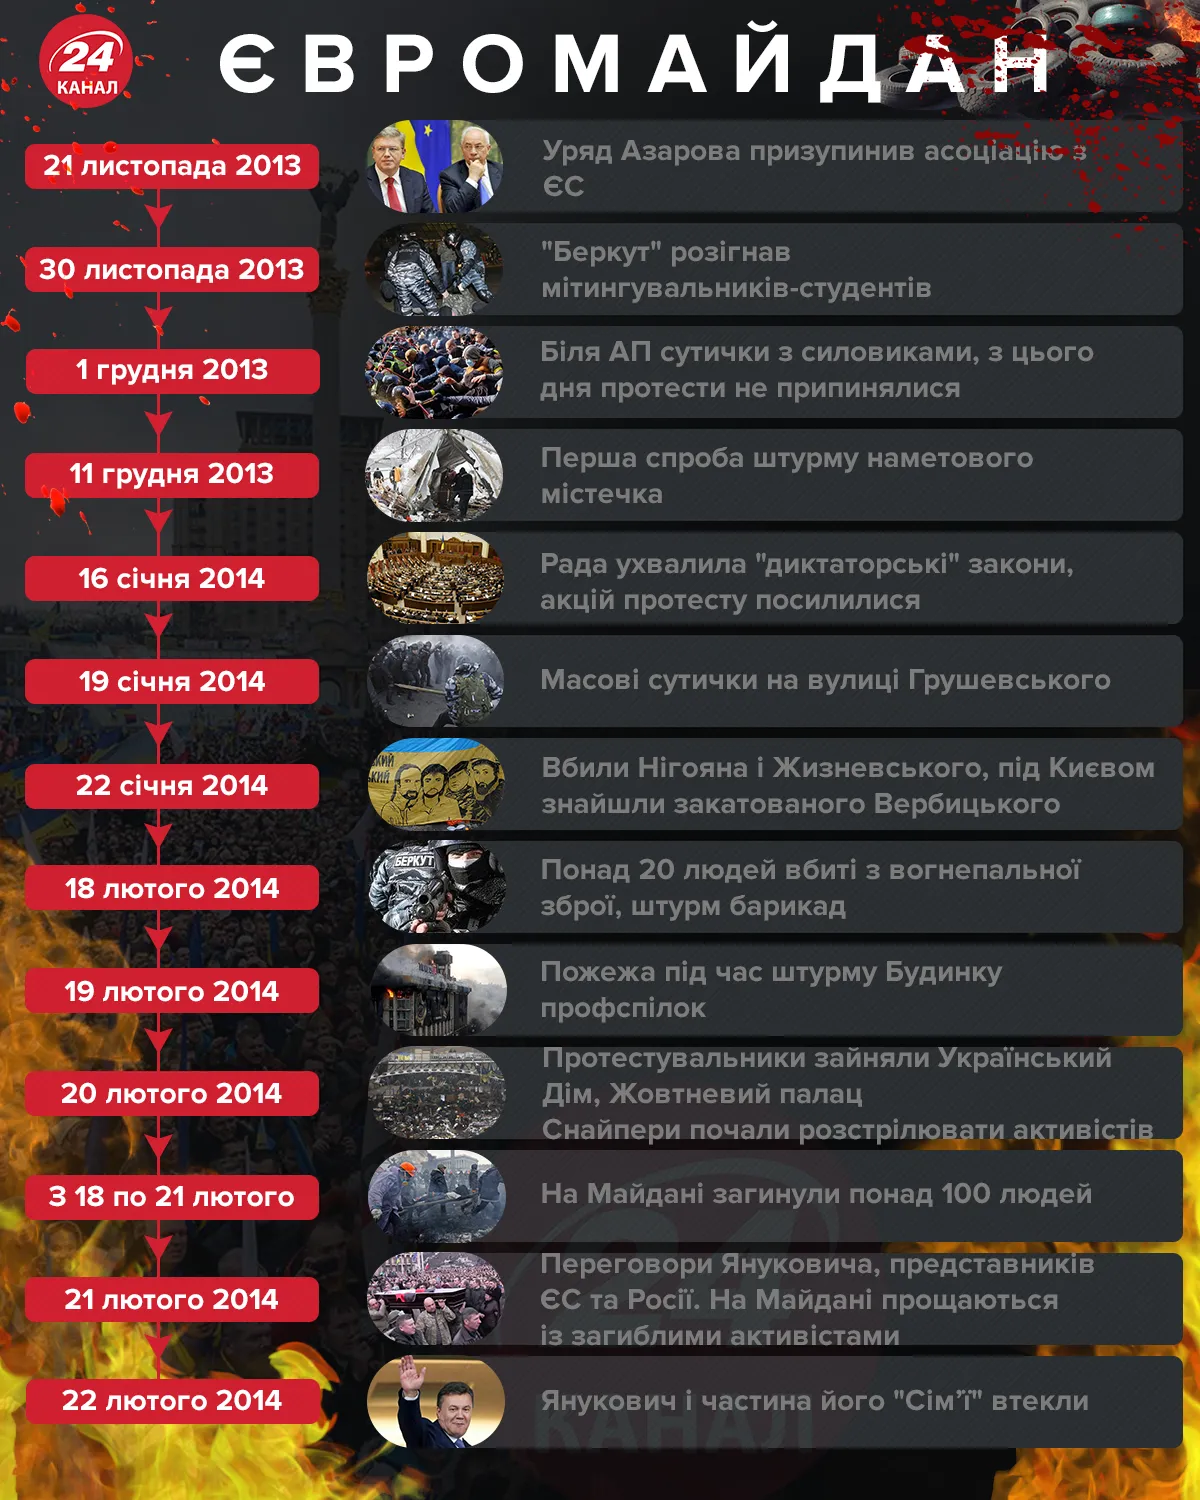 Евромайдан 24 канал